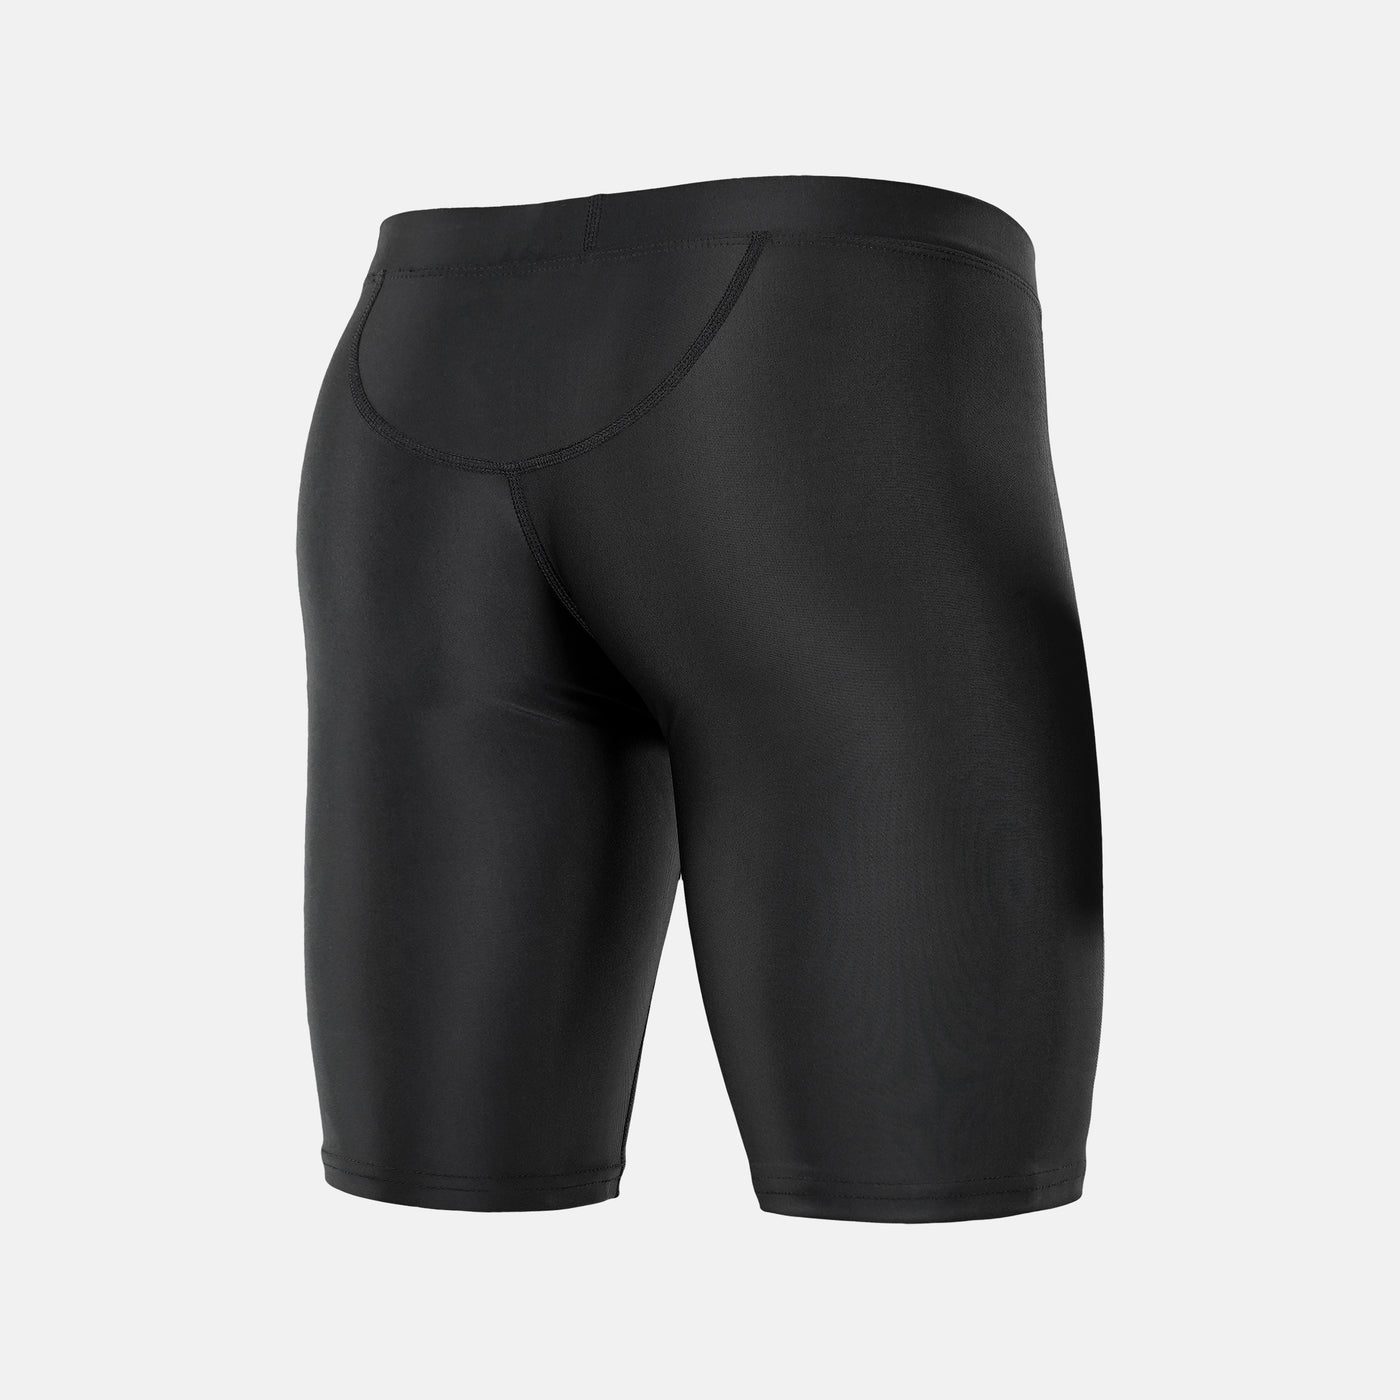 Basic Black 7 on 7 Compression Shorts